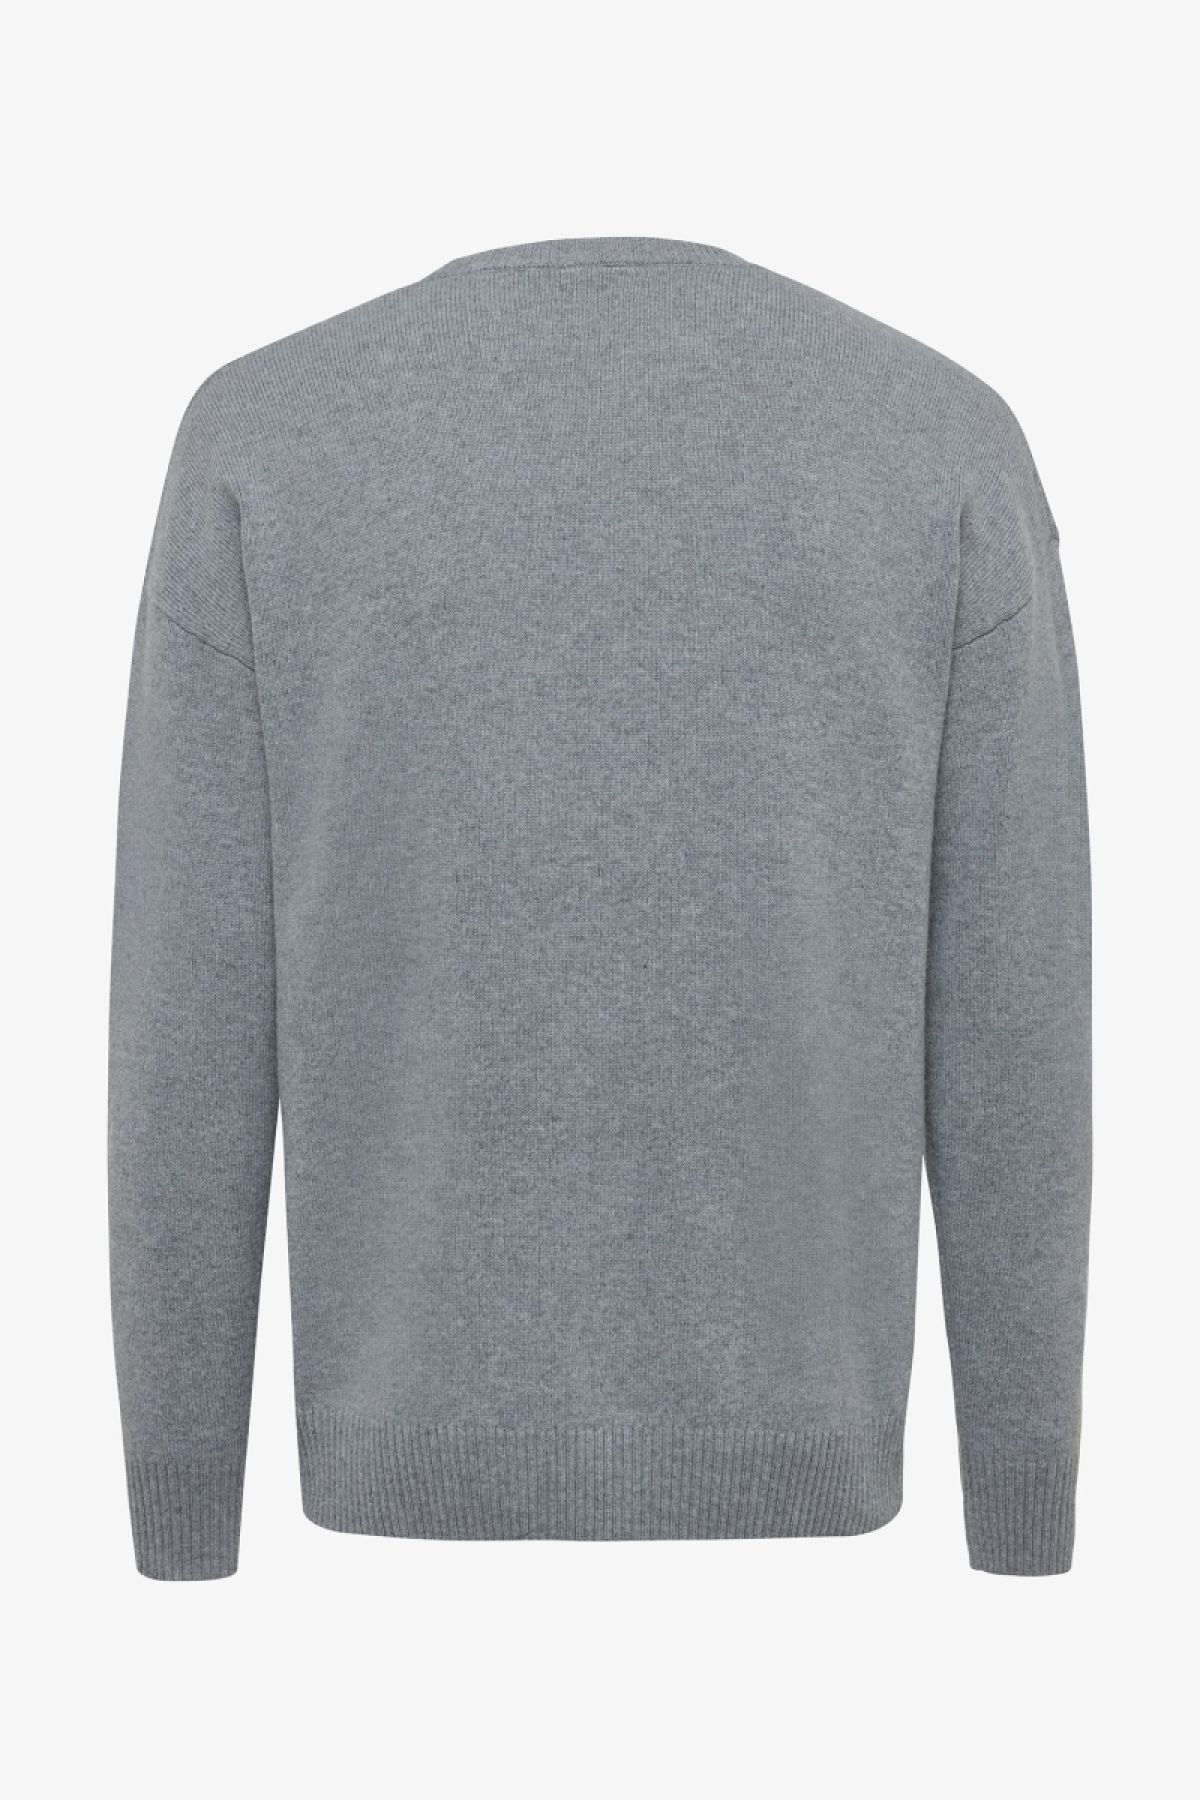 Monogram pullover grey